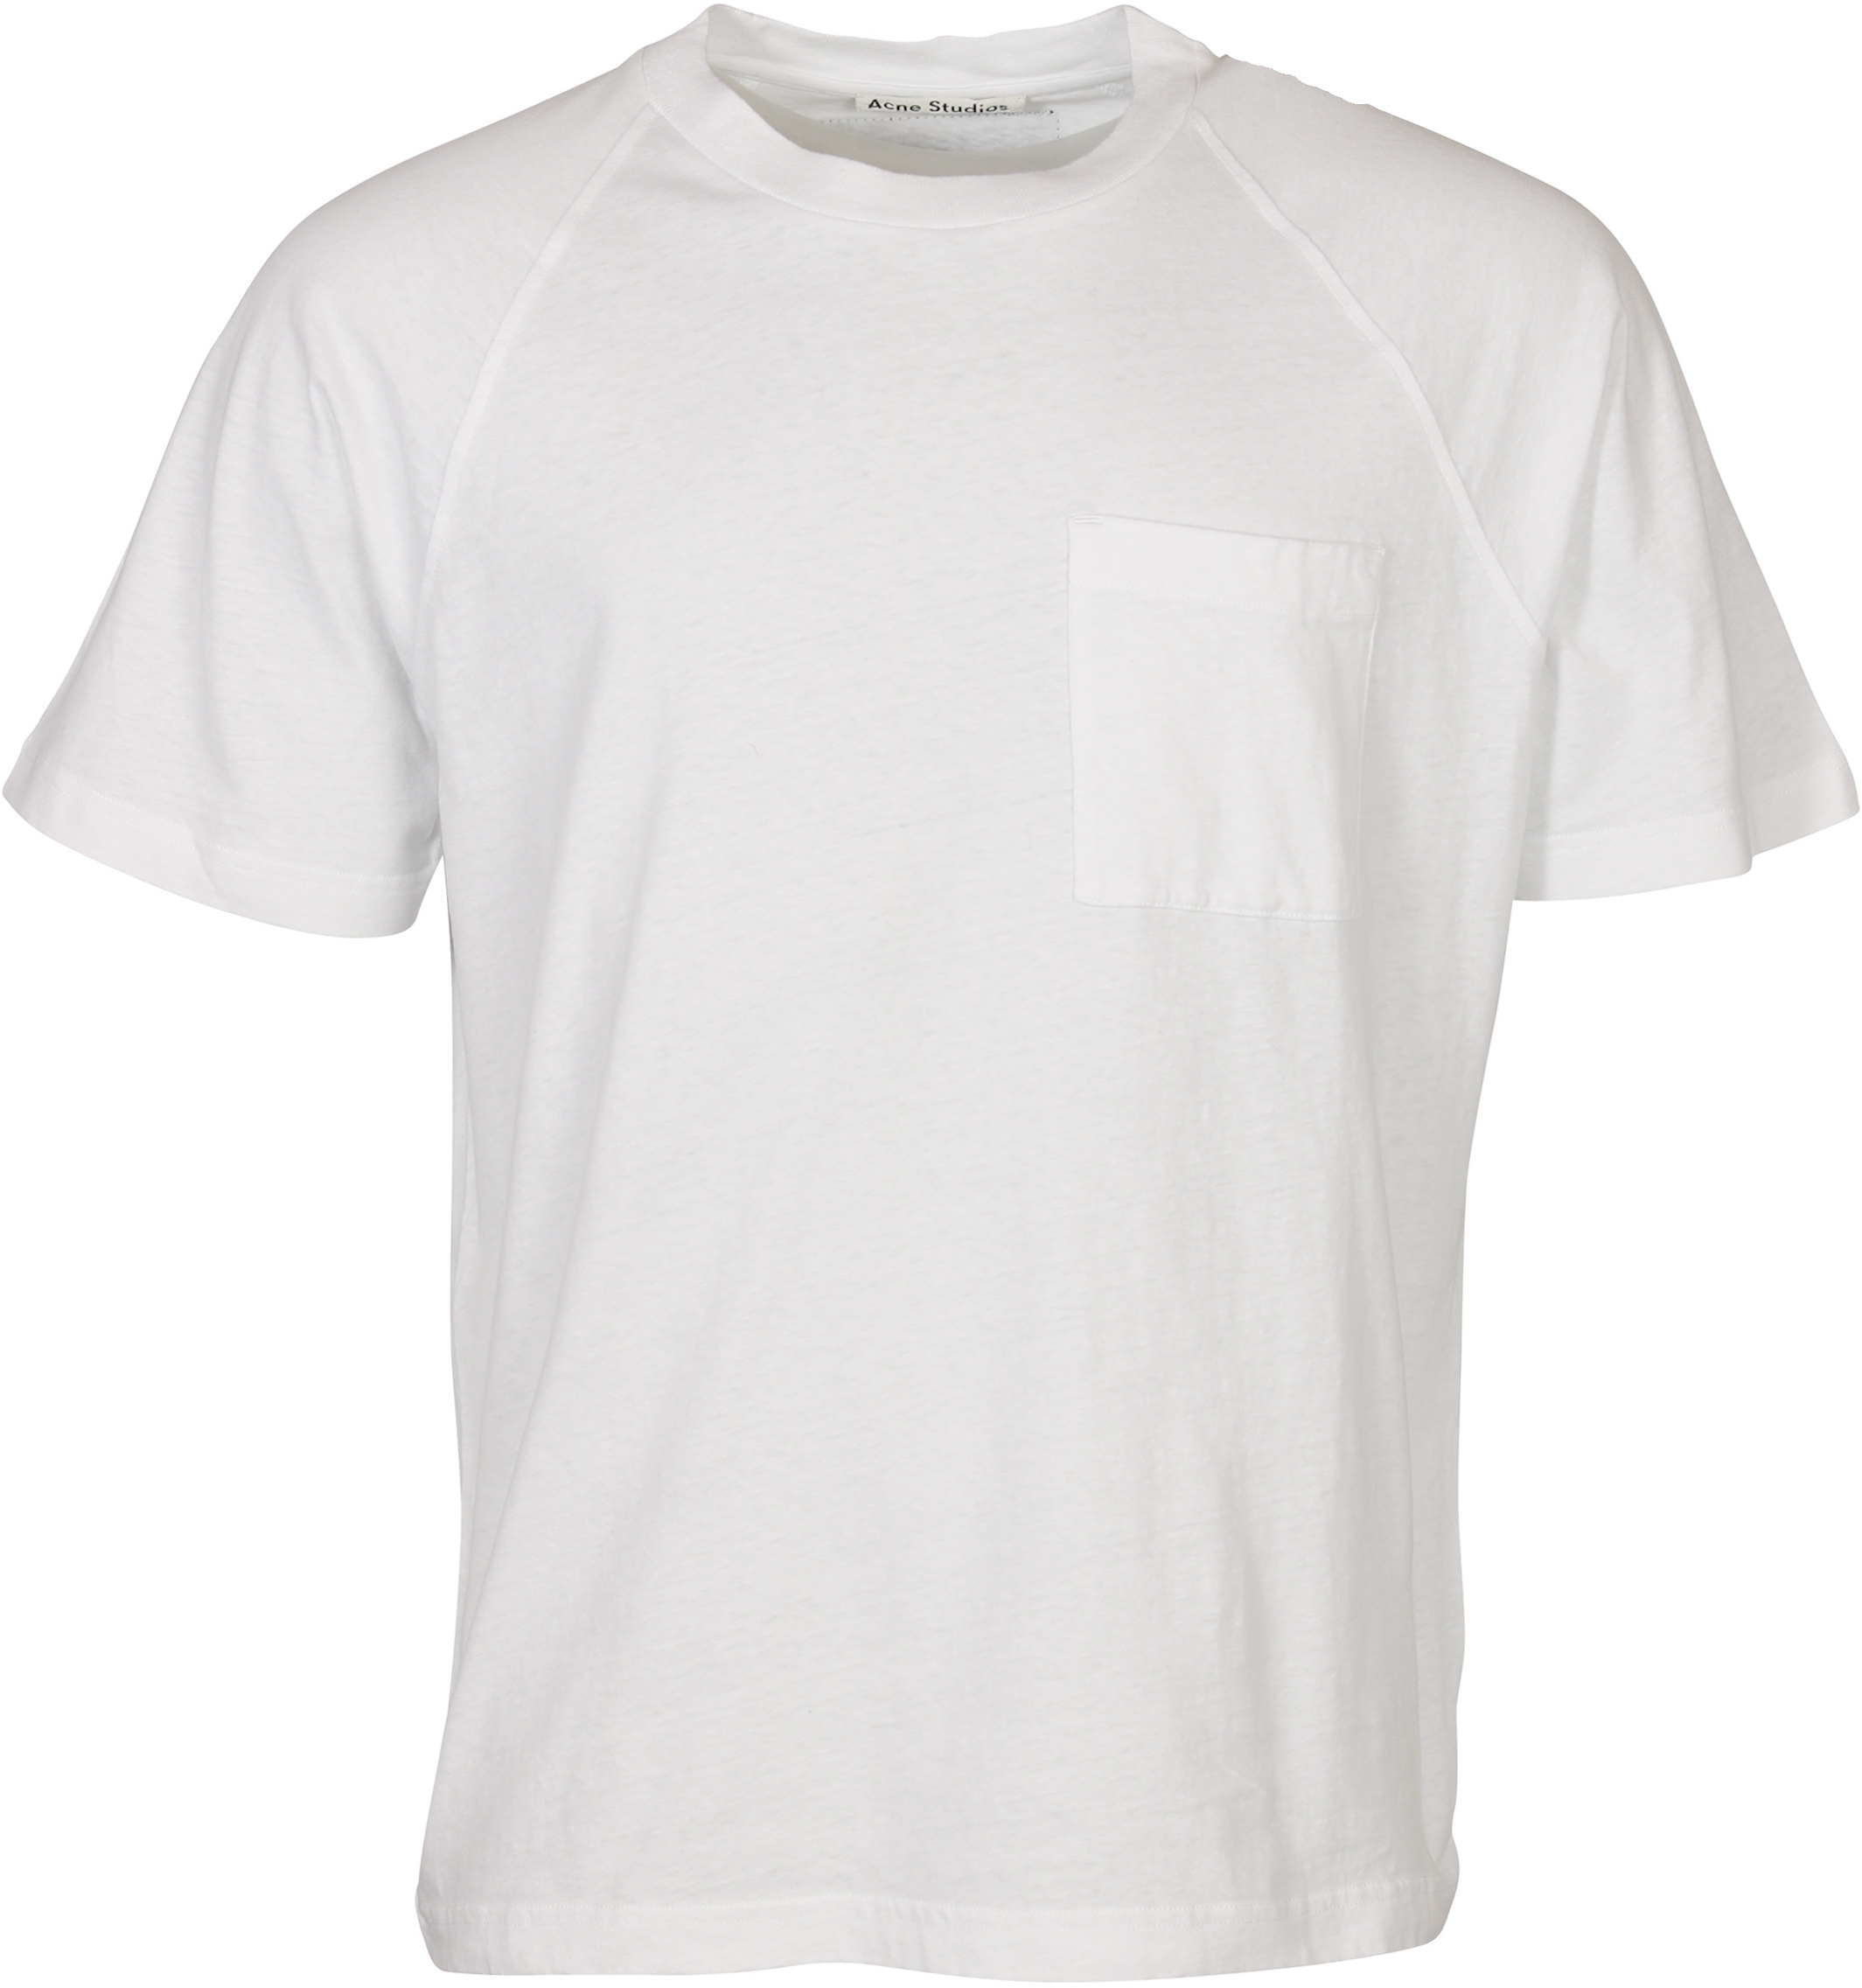 Acne Studios T-Shirt Emeril Reverse Label White S